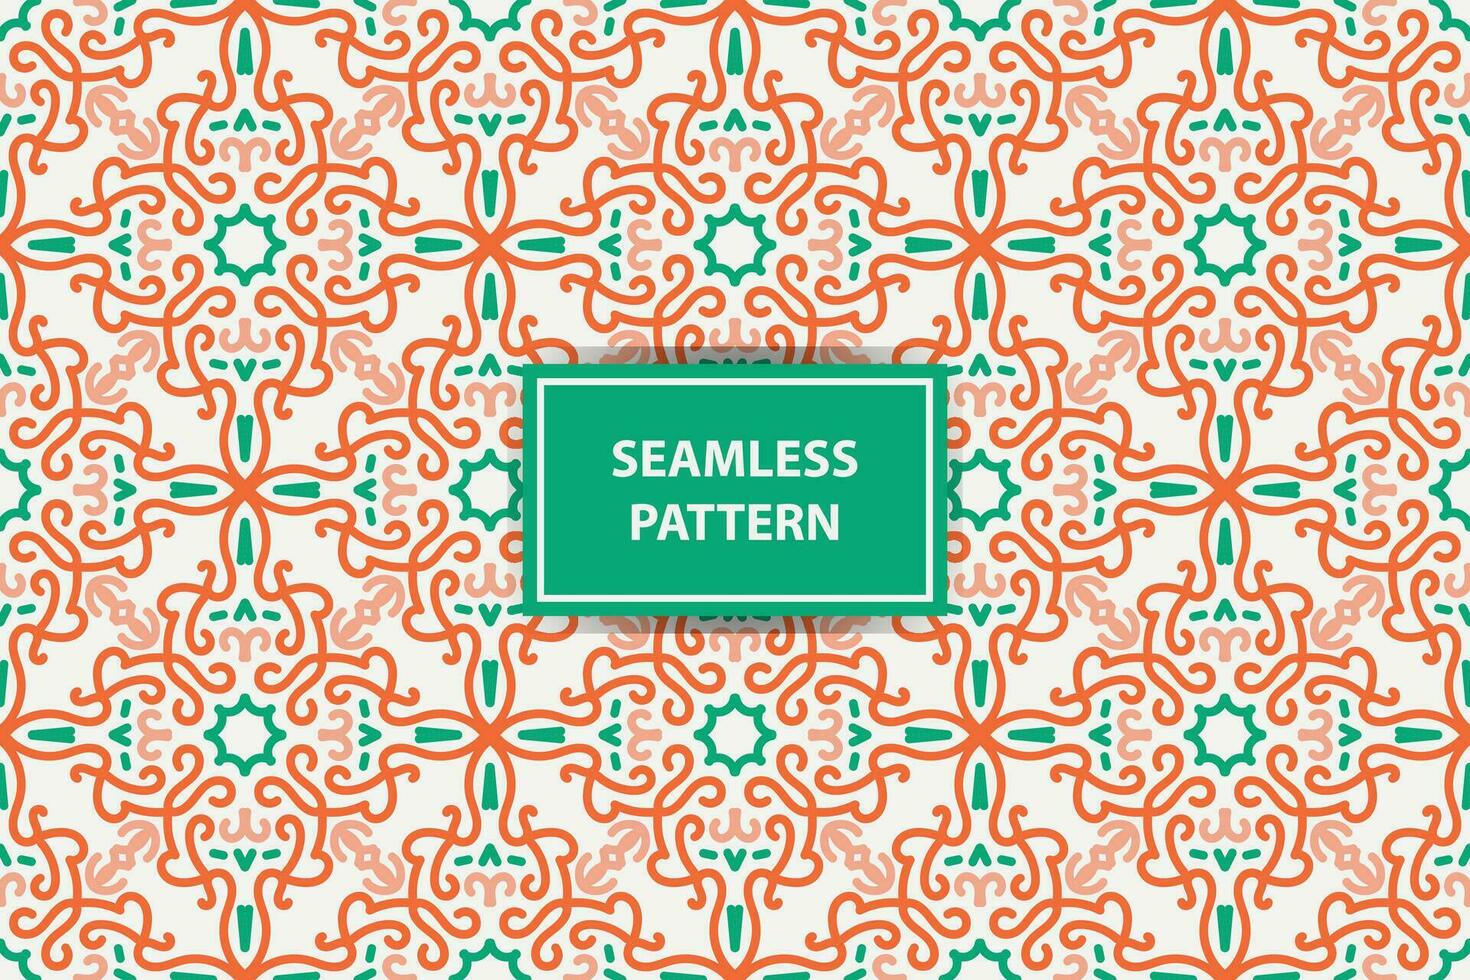 marockansk etnisk sömlös mönster design. aztec tyg matta mandala prydnad sparre textil- dekoration tapet. stam- Kalkon afrikansk indisk traditionell broderi vektor illustrationer bakgrund